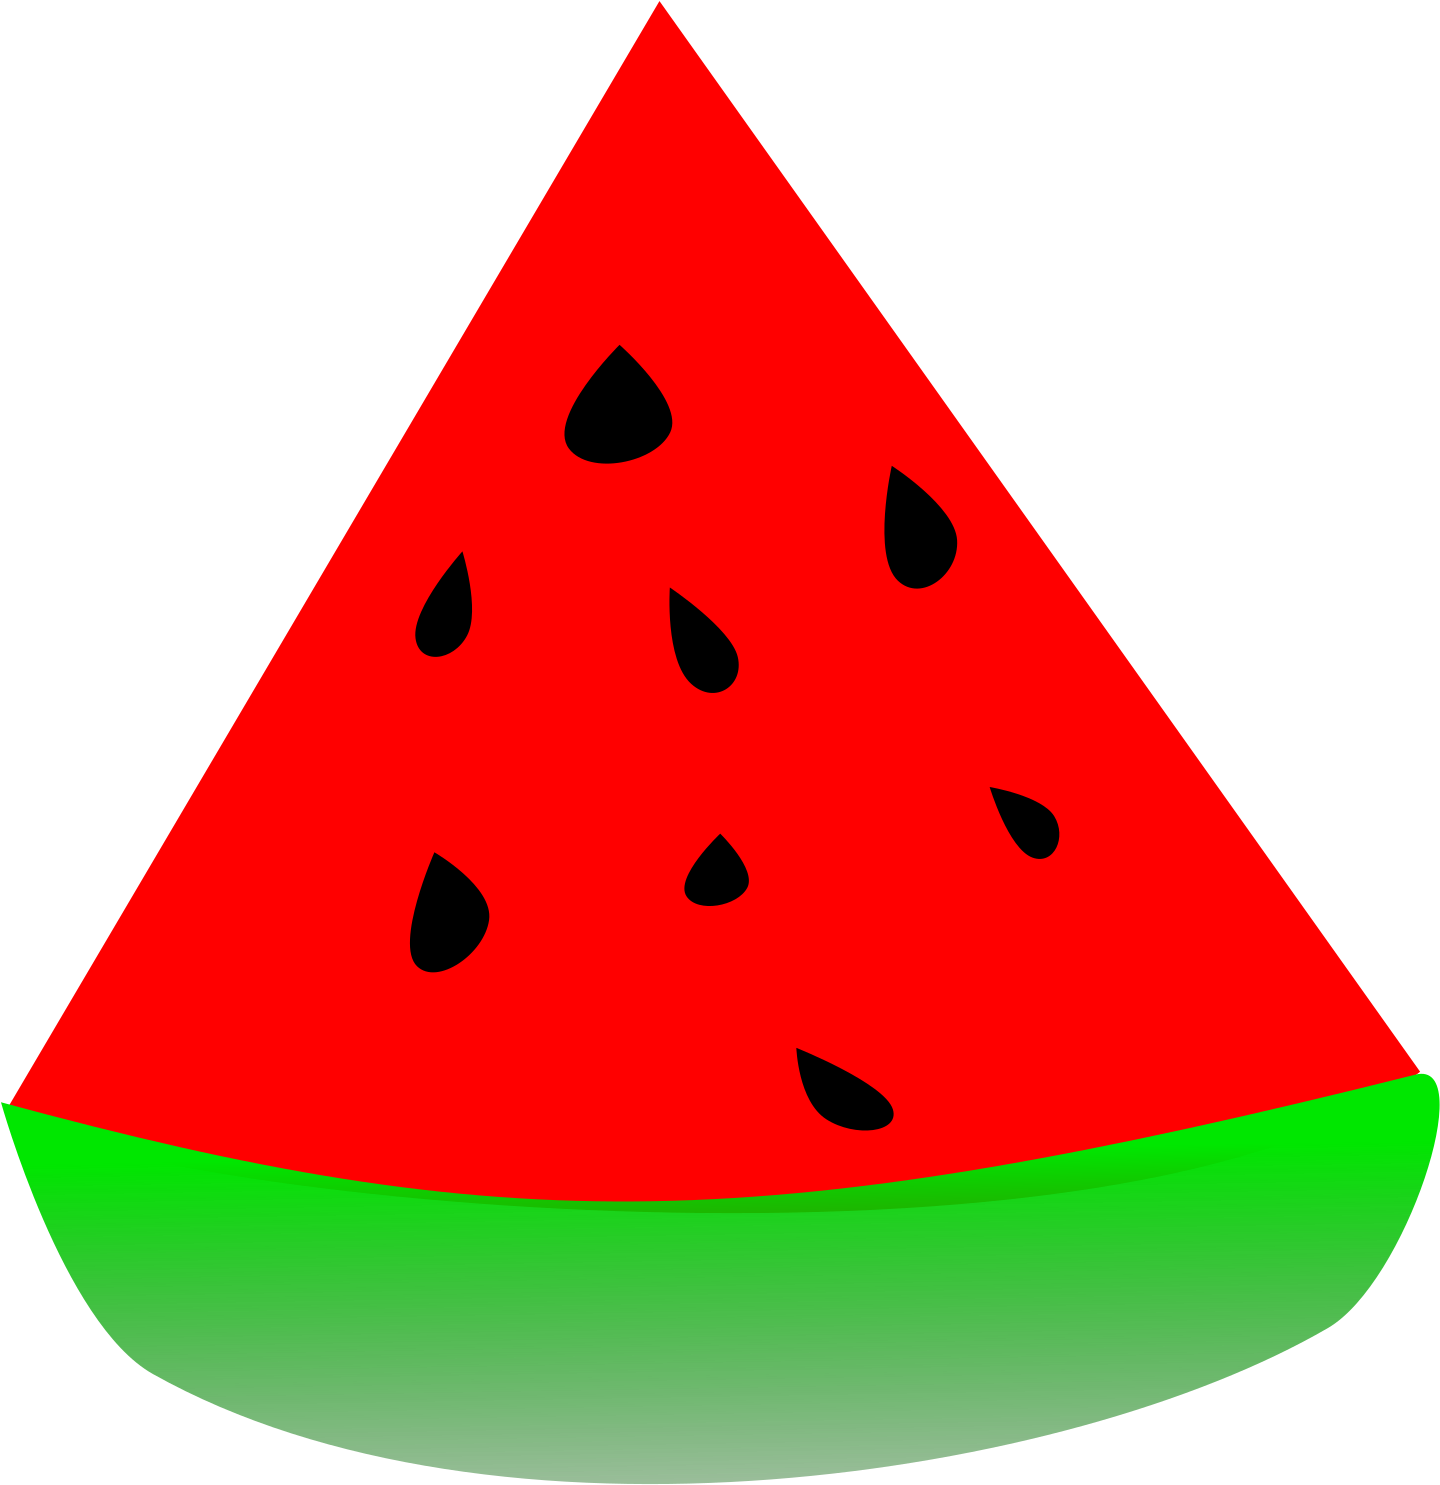 Watermelon - Watermelon .png (1697x2400)